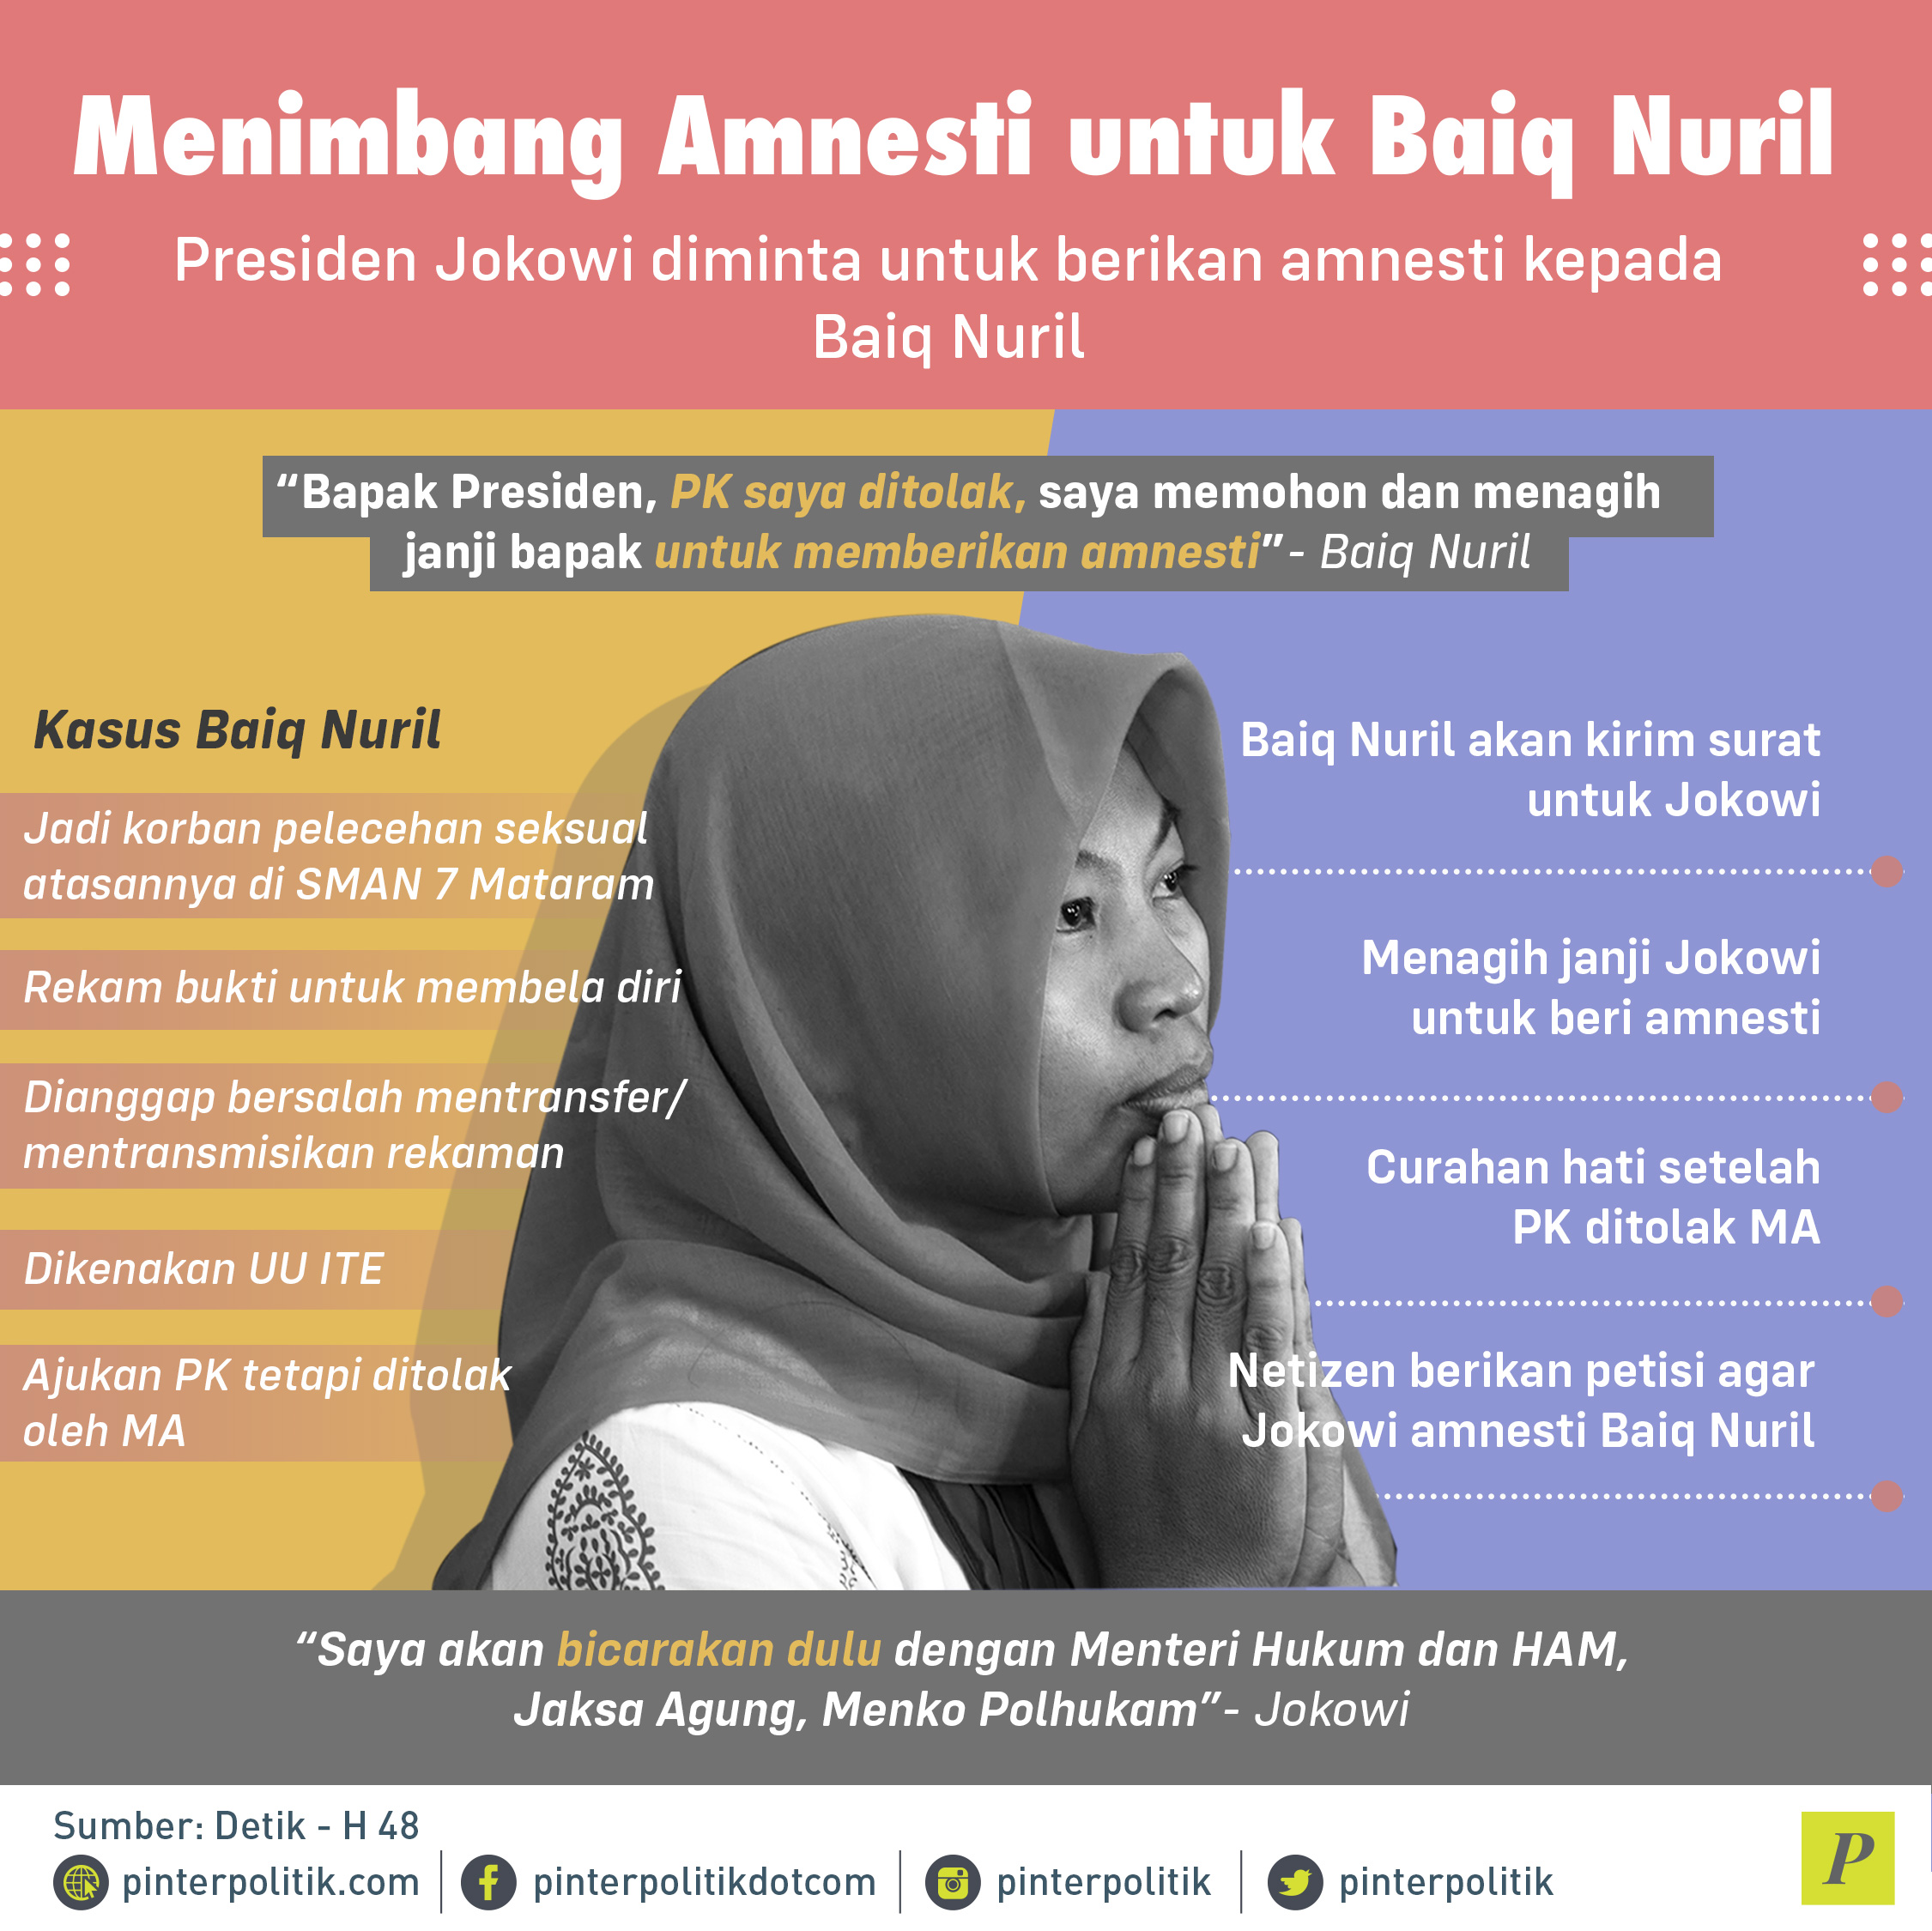 Amnesti untuk Baiq Nuril